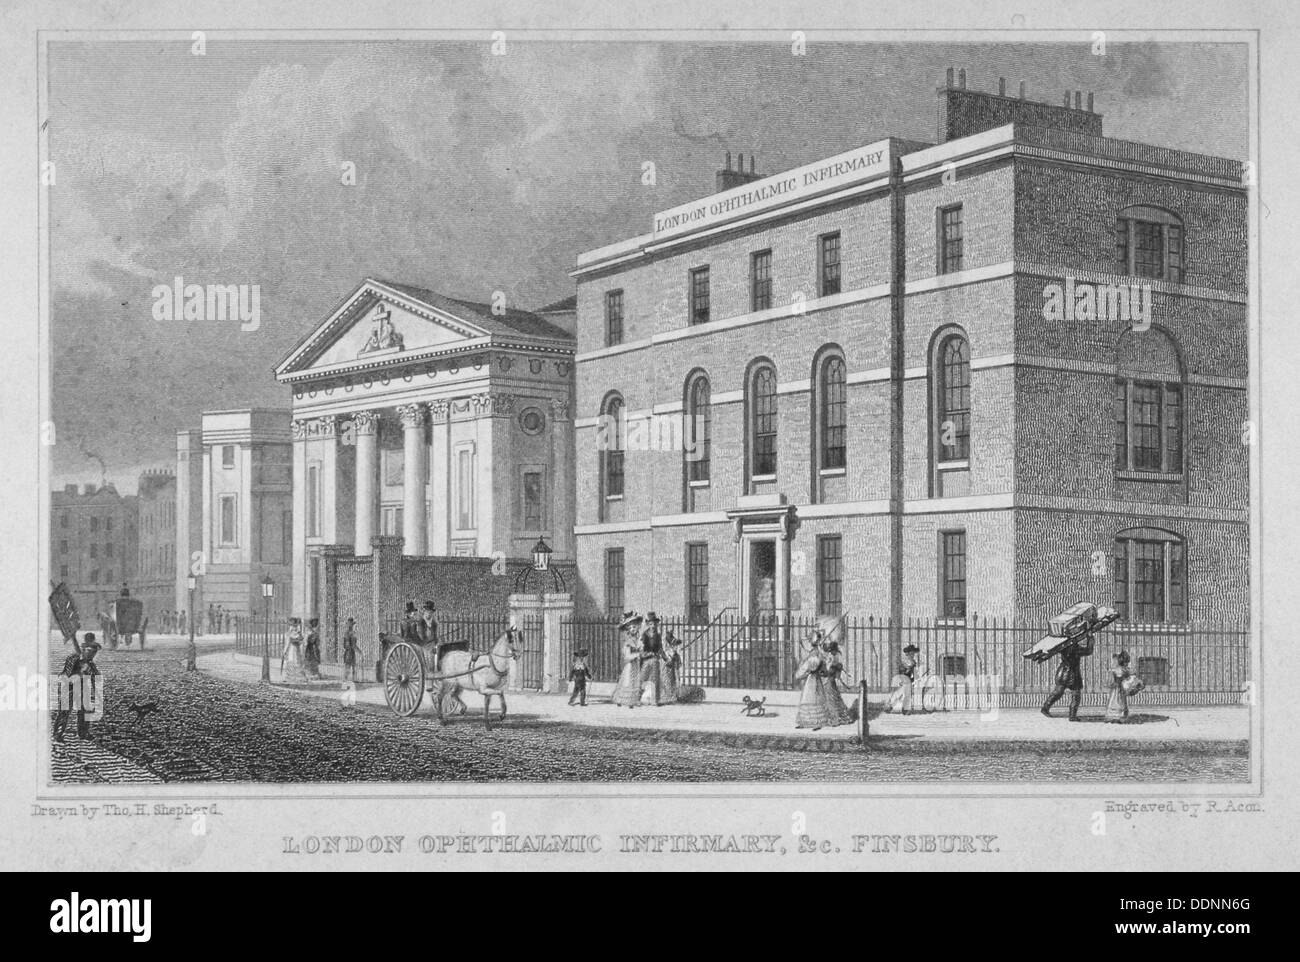 Blick auf London Opthalmic Krankenstation, Blomfield Street, City of London, 1830.                      Künstler: R Acon Stockfoto